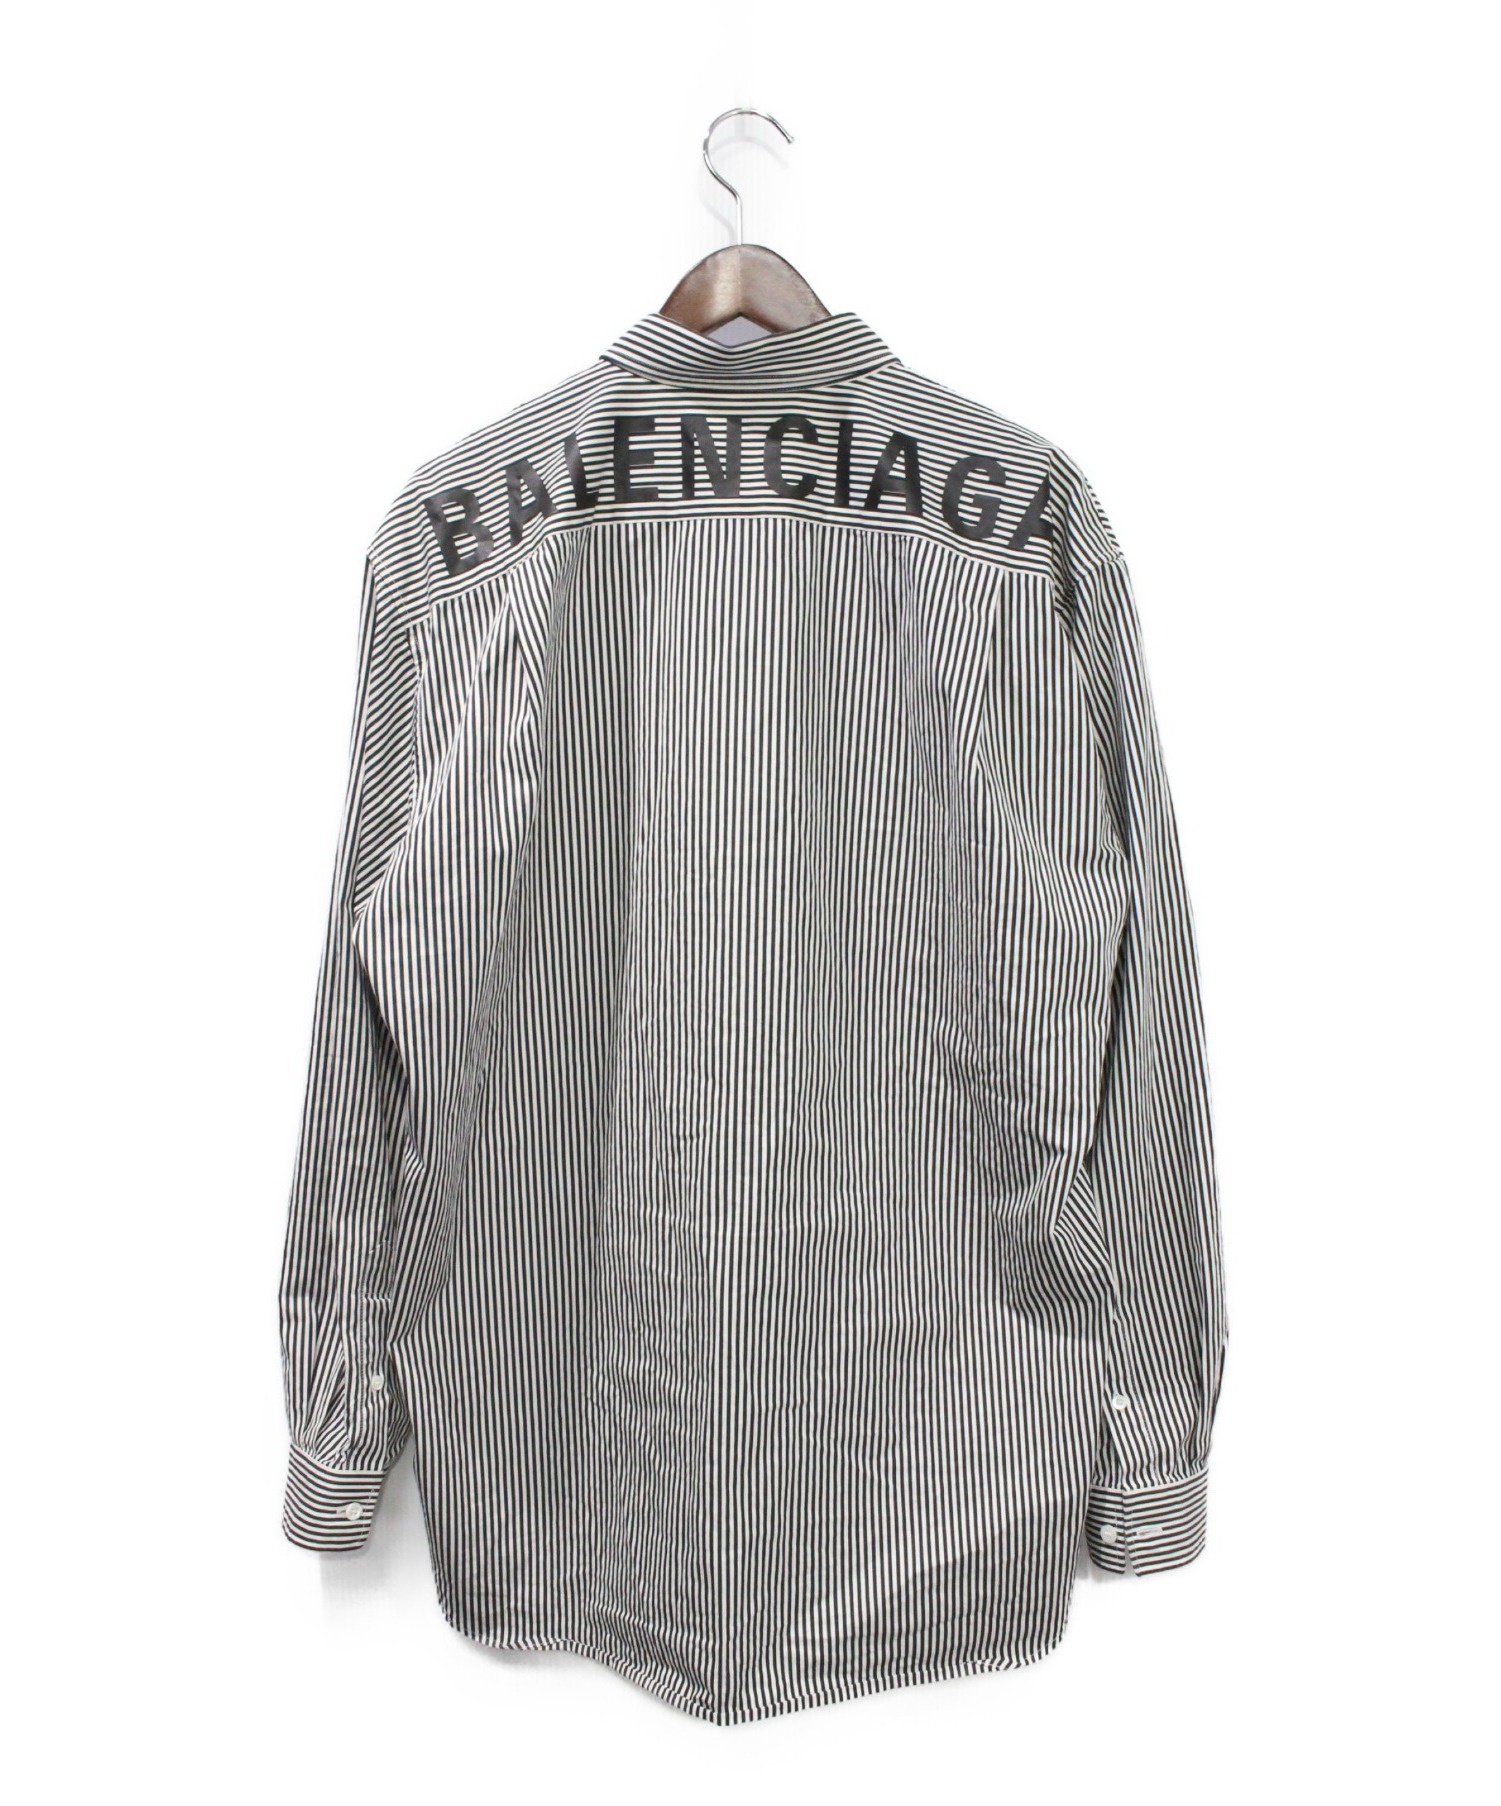 BALENCIAGA (バレンシアガ) バックロゴボタンダウンシャツ ブラック×ホワイト サイズ:38